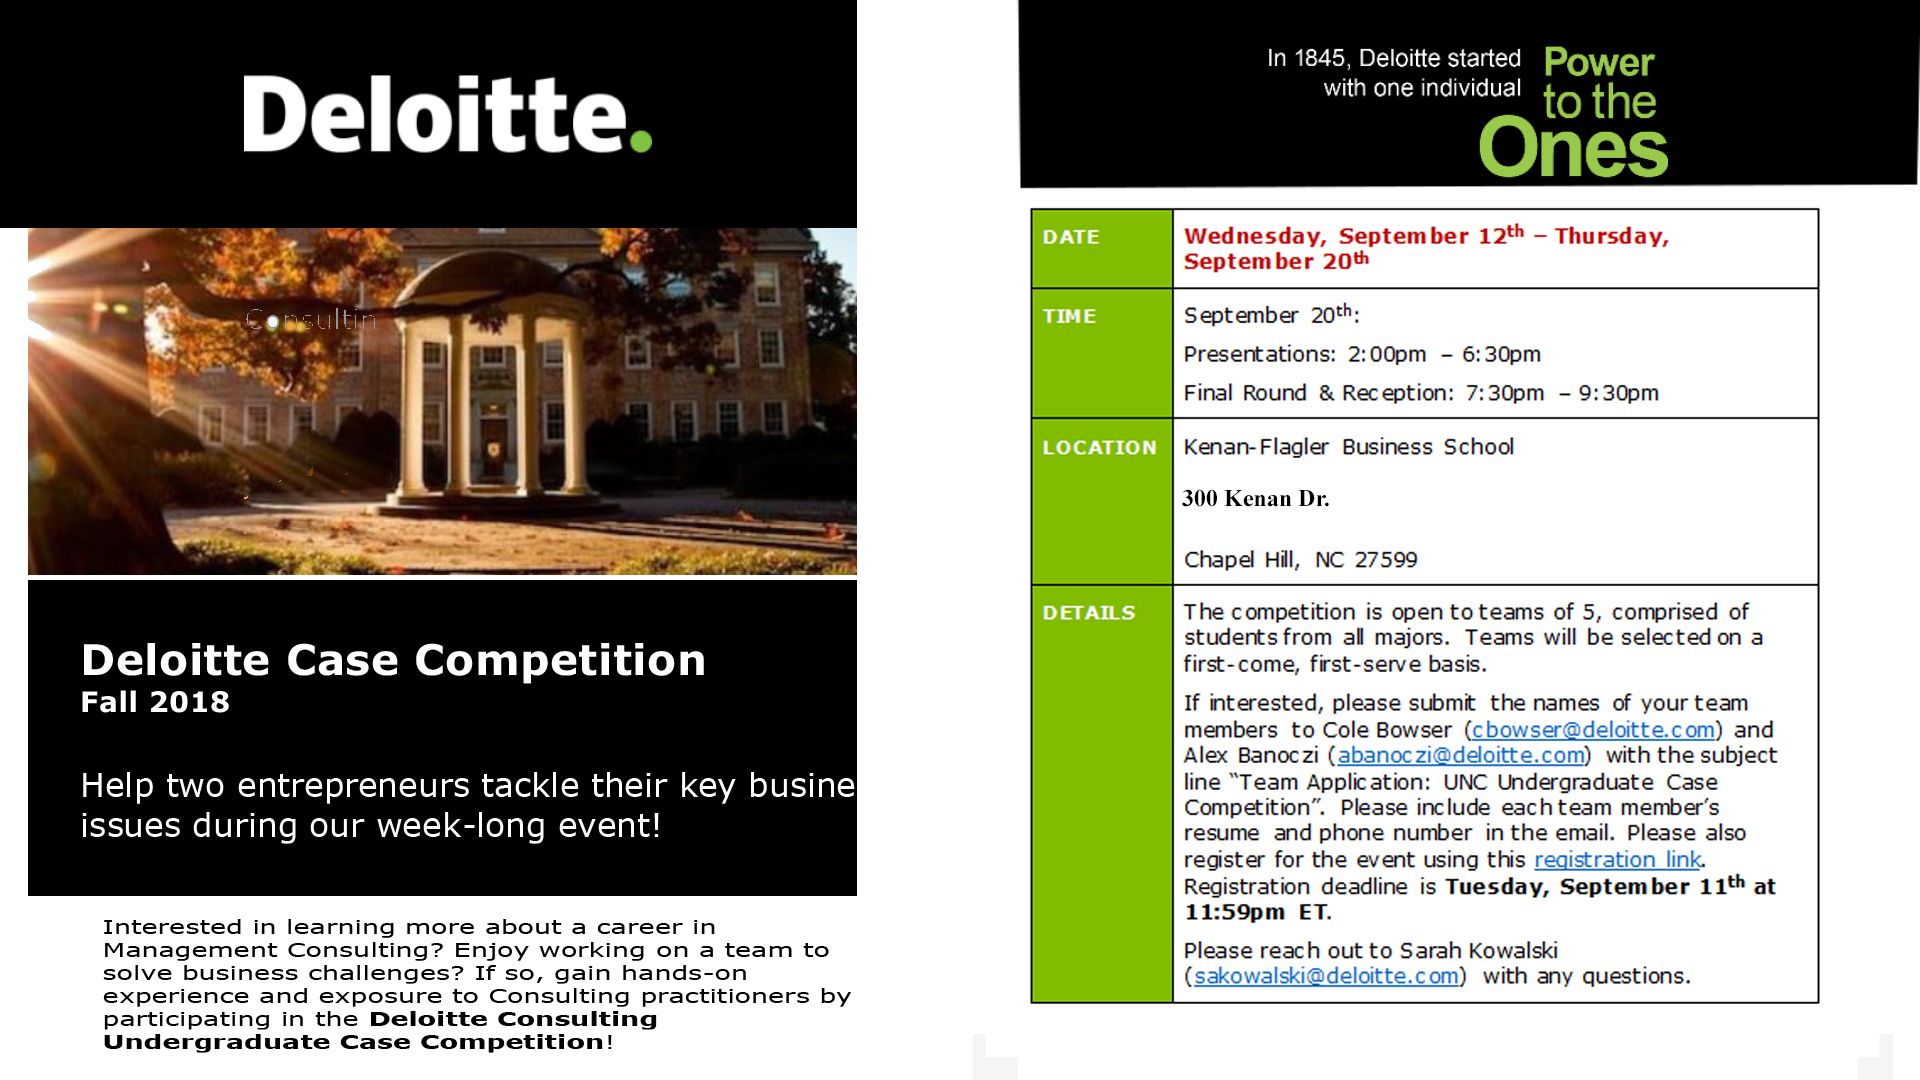 Deloitte Case Competition Digital Signage Student Affairs